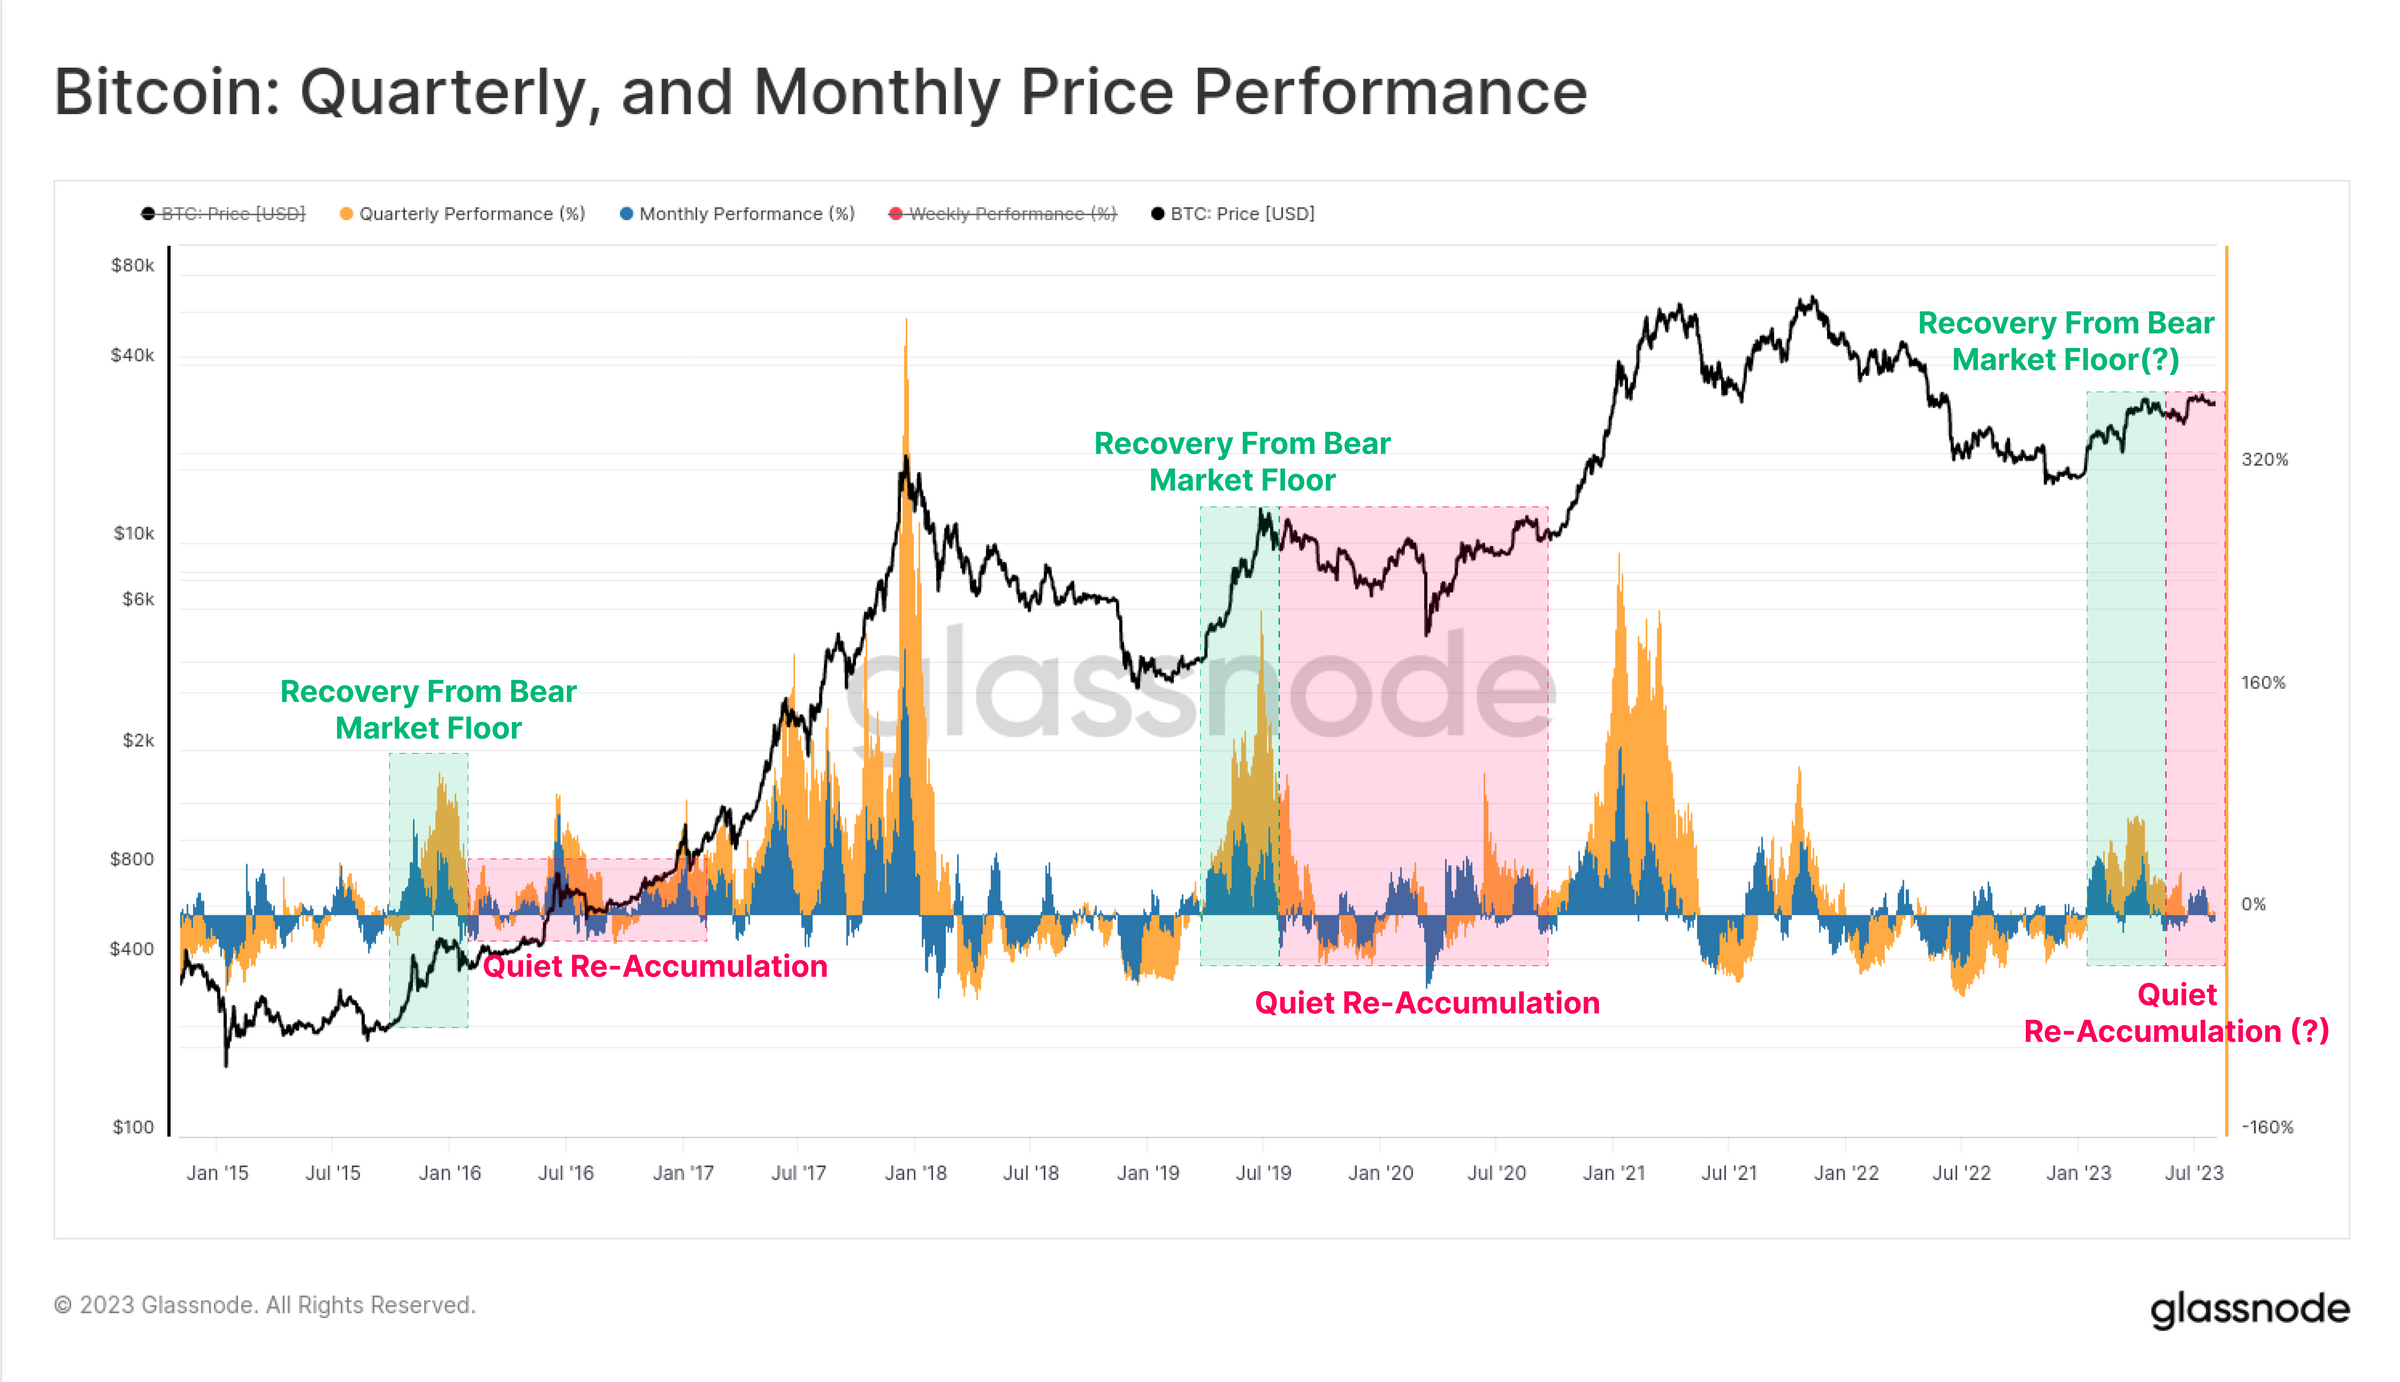 Bitcoin price performance